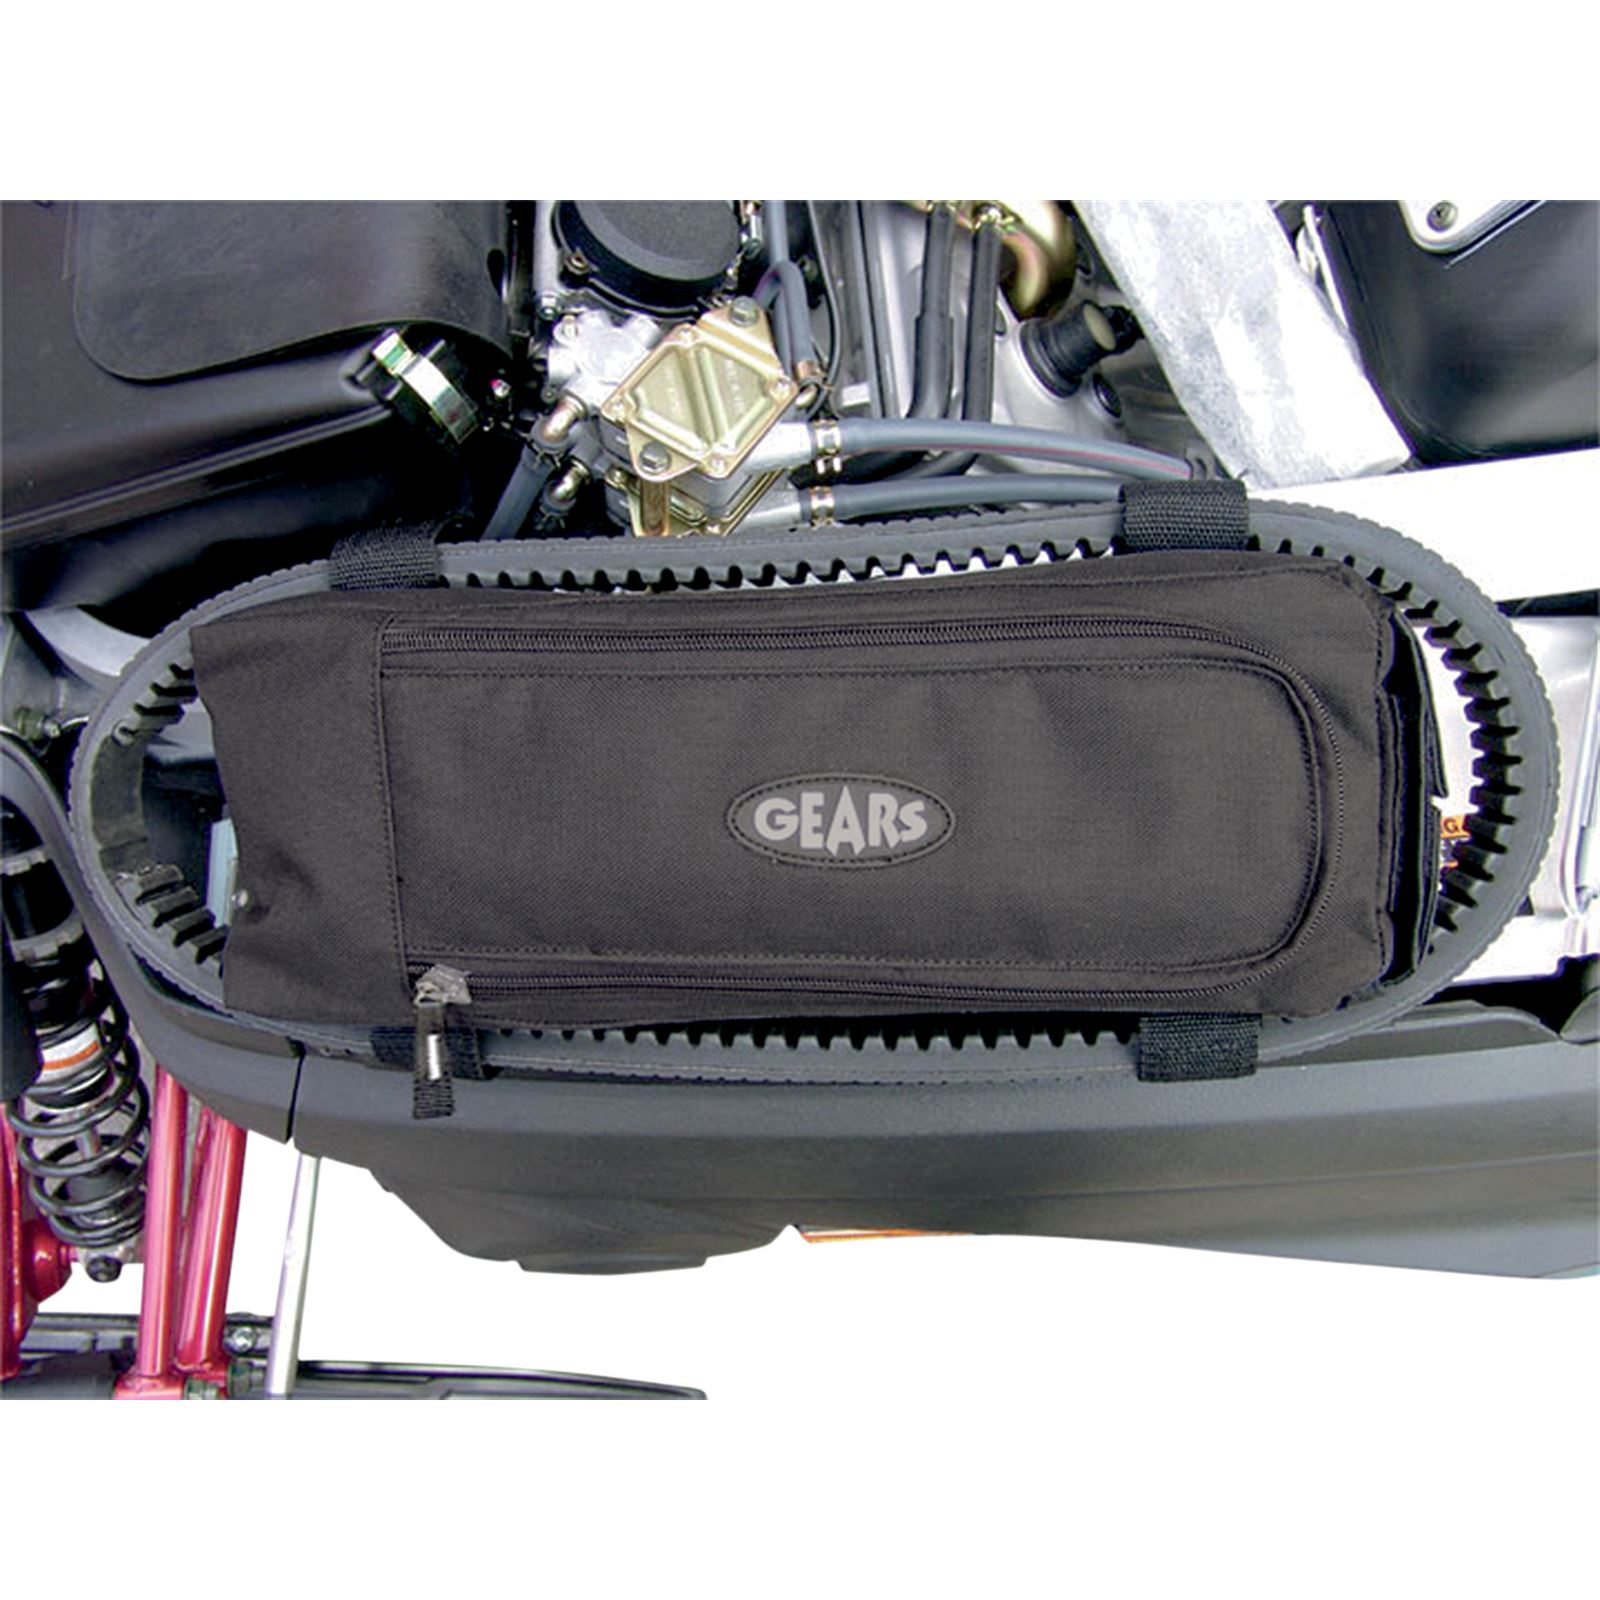 Gears Luggage Tool Bag